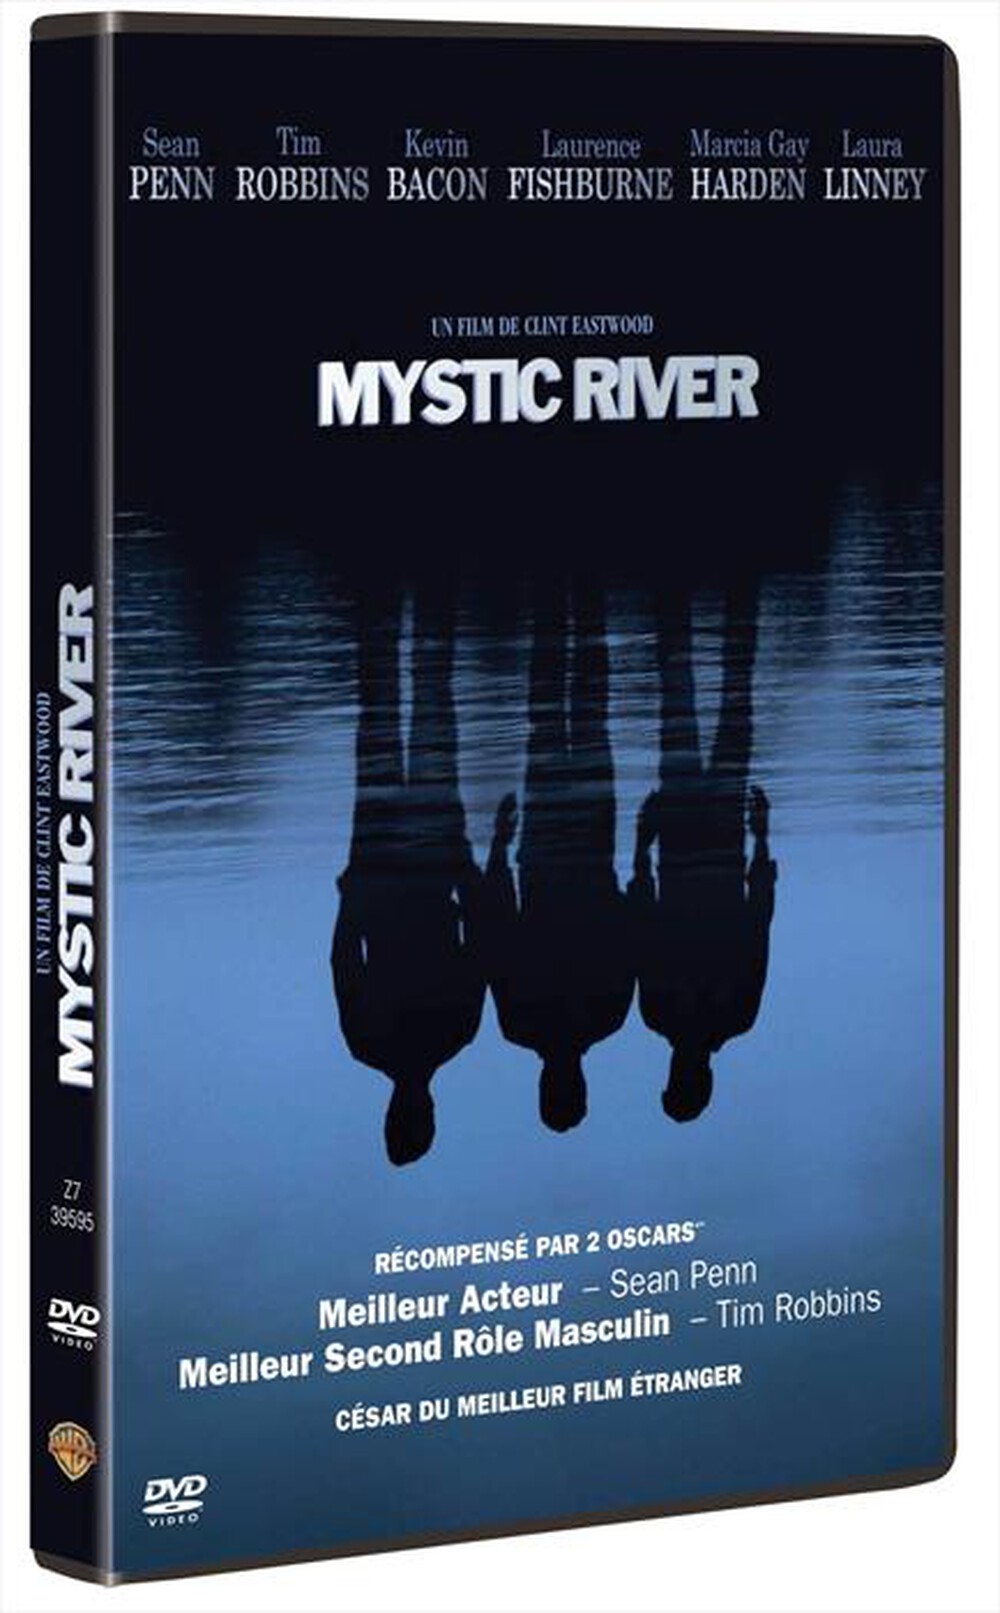 "WARNER HOME VIDEO - Mystic River"